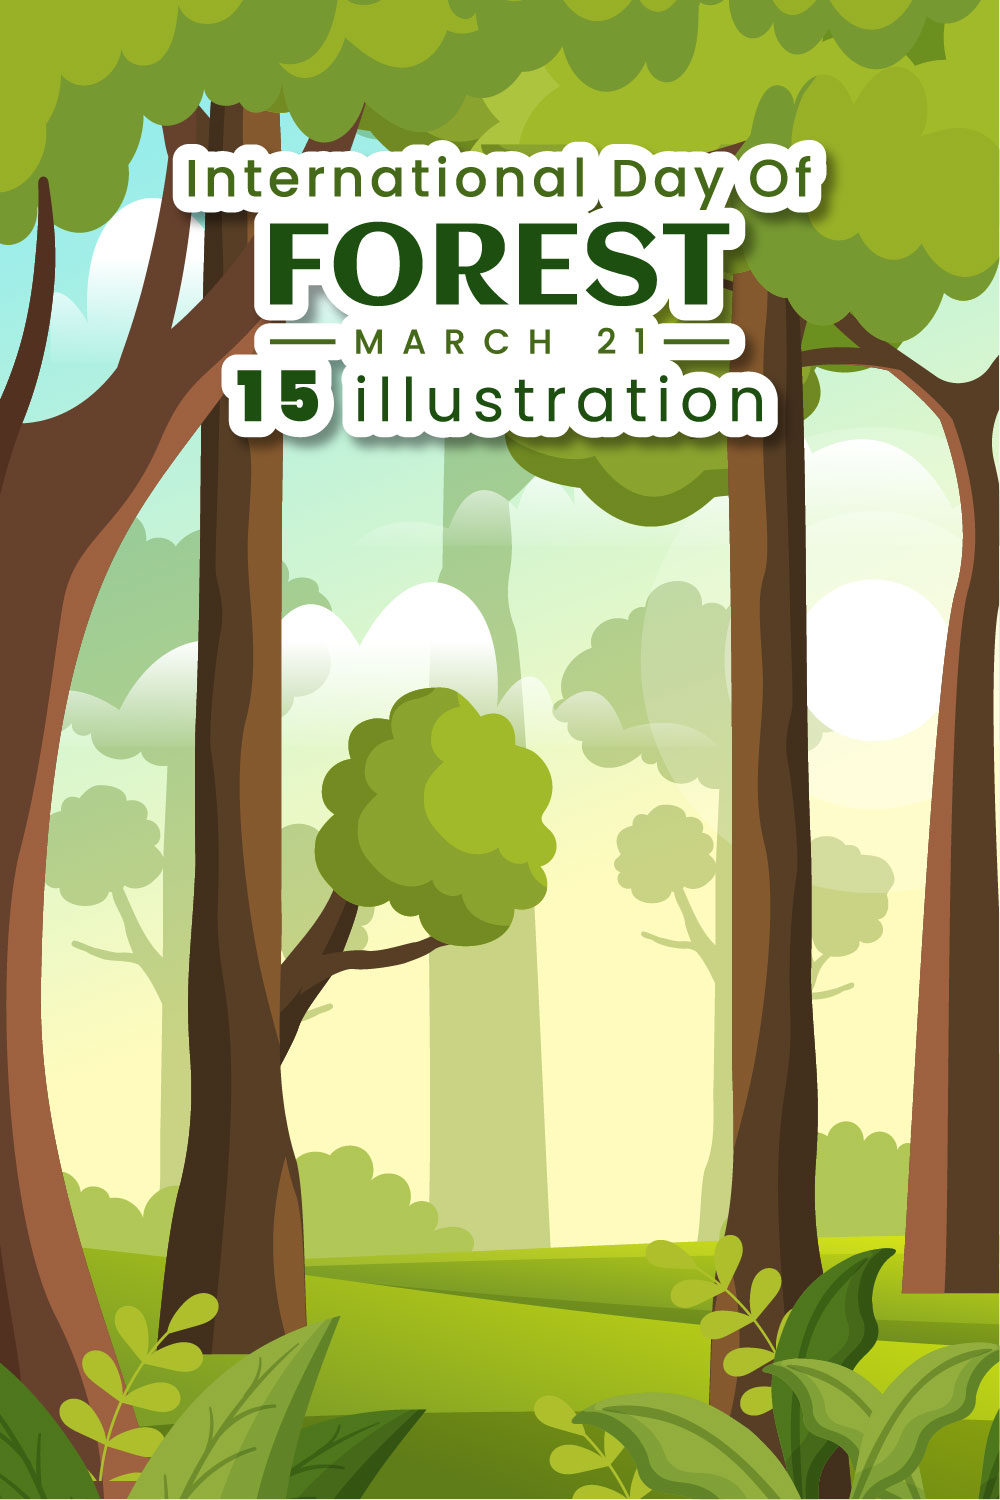 World Forestry Day Illustration pinterest image.